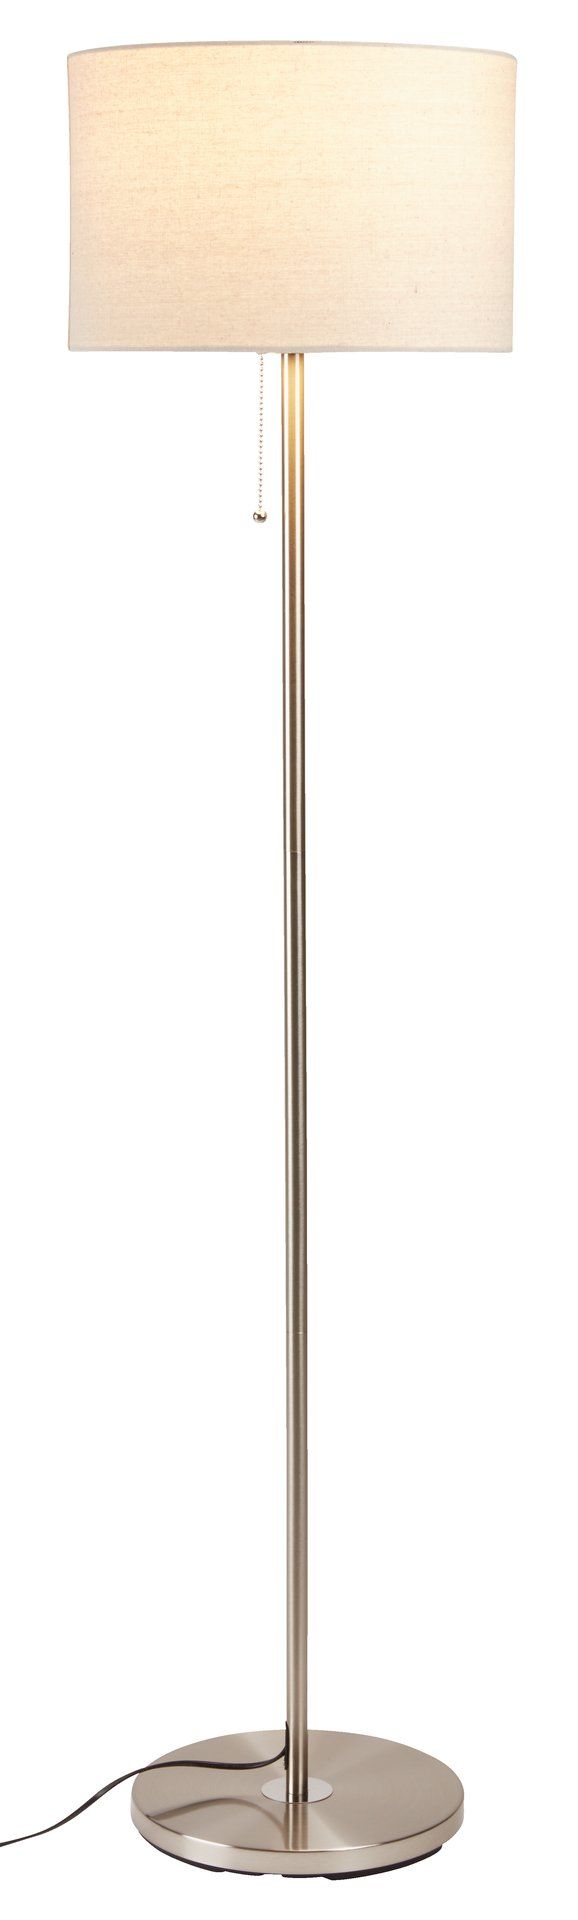 Lampe KRISTOF H145cm 